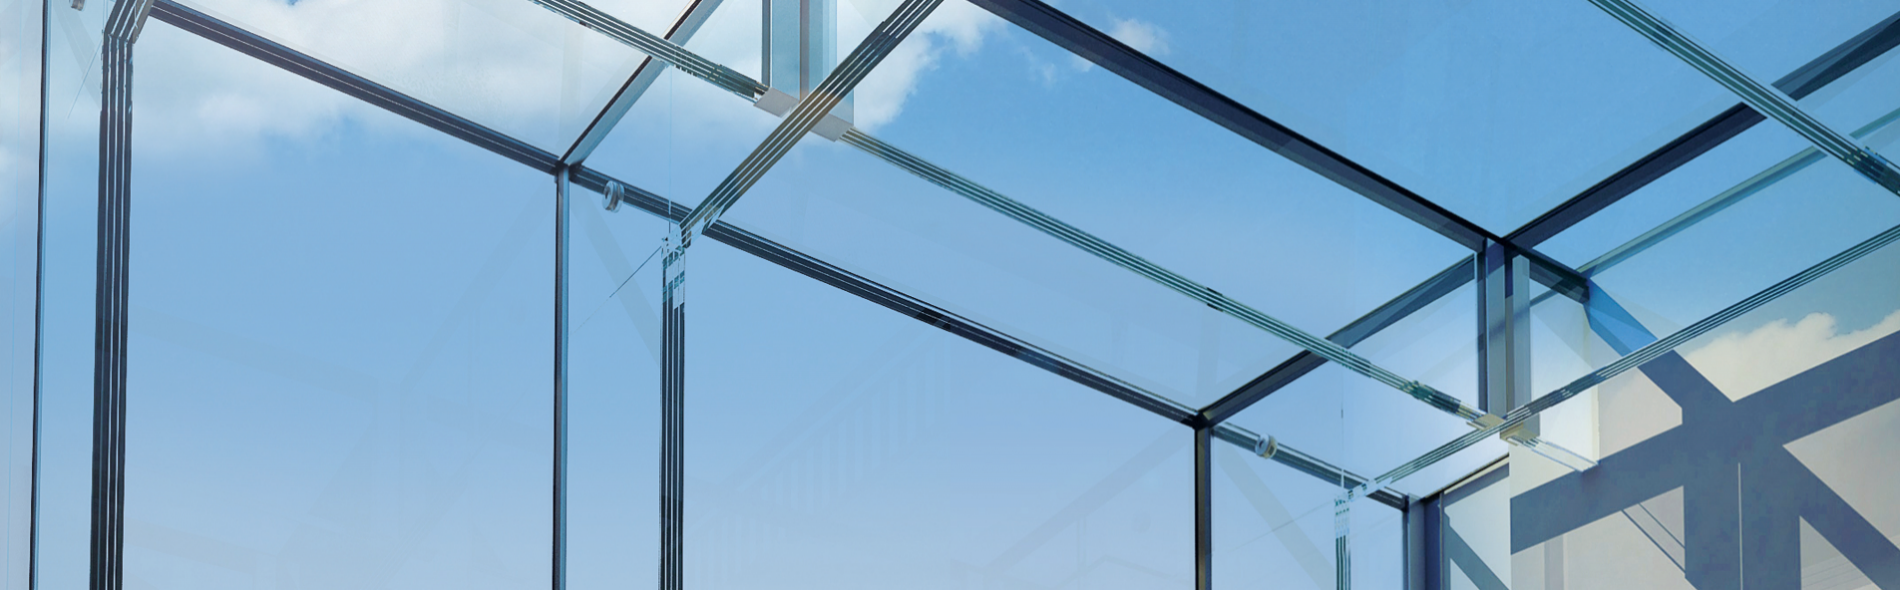 Structural Glass Atrium